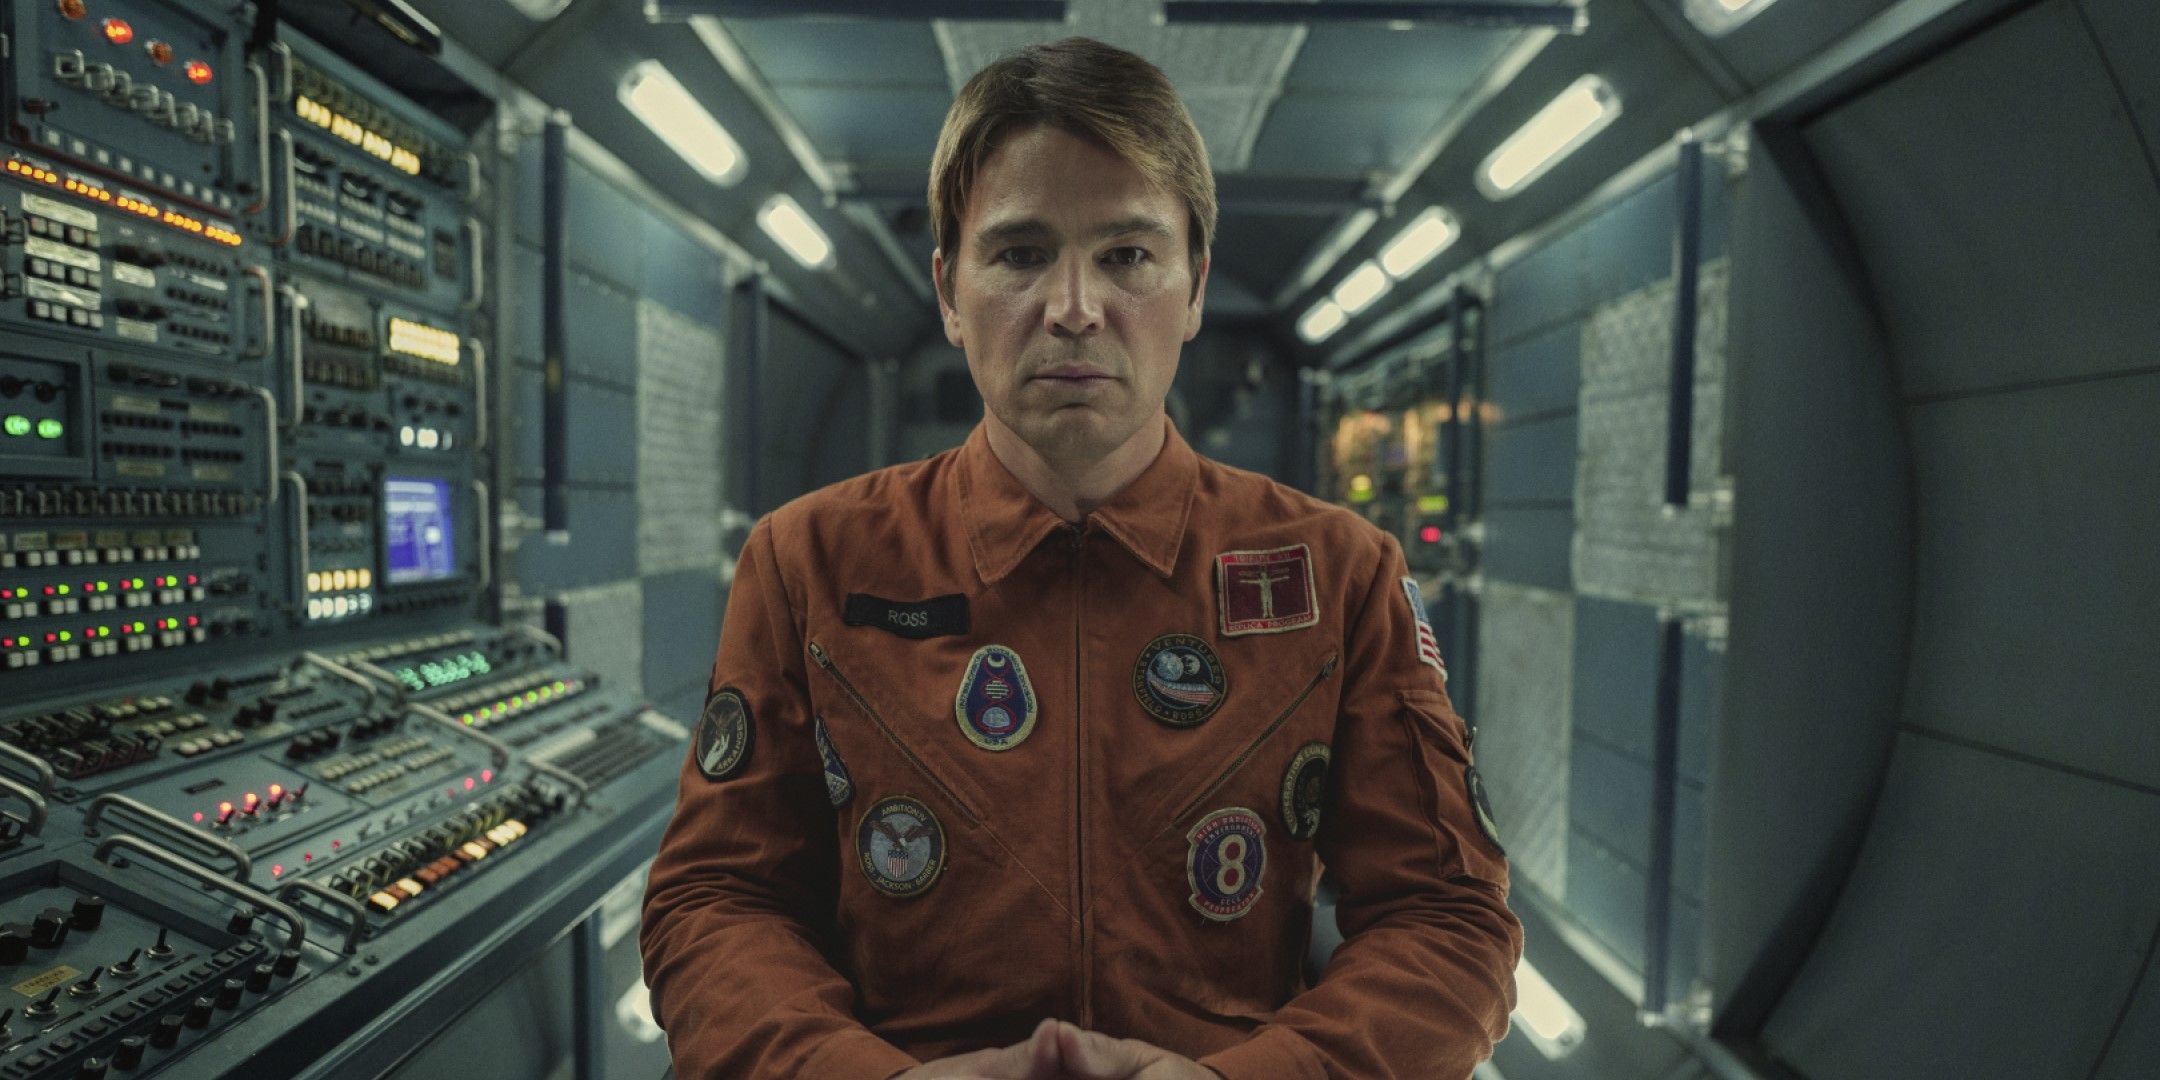 David Ross (acto Josh Harnett) sits in an orange shirt in space in Black Mirror